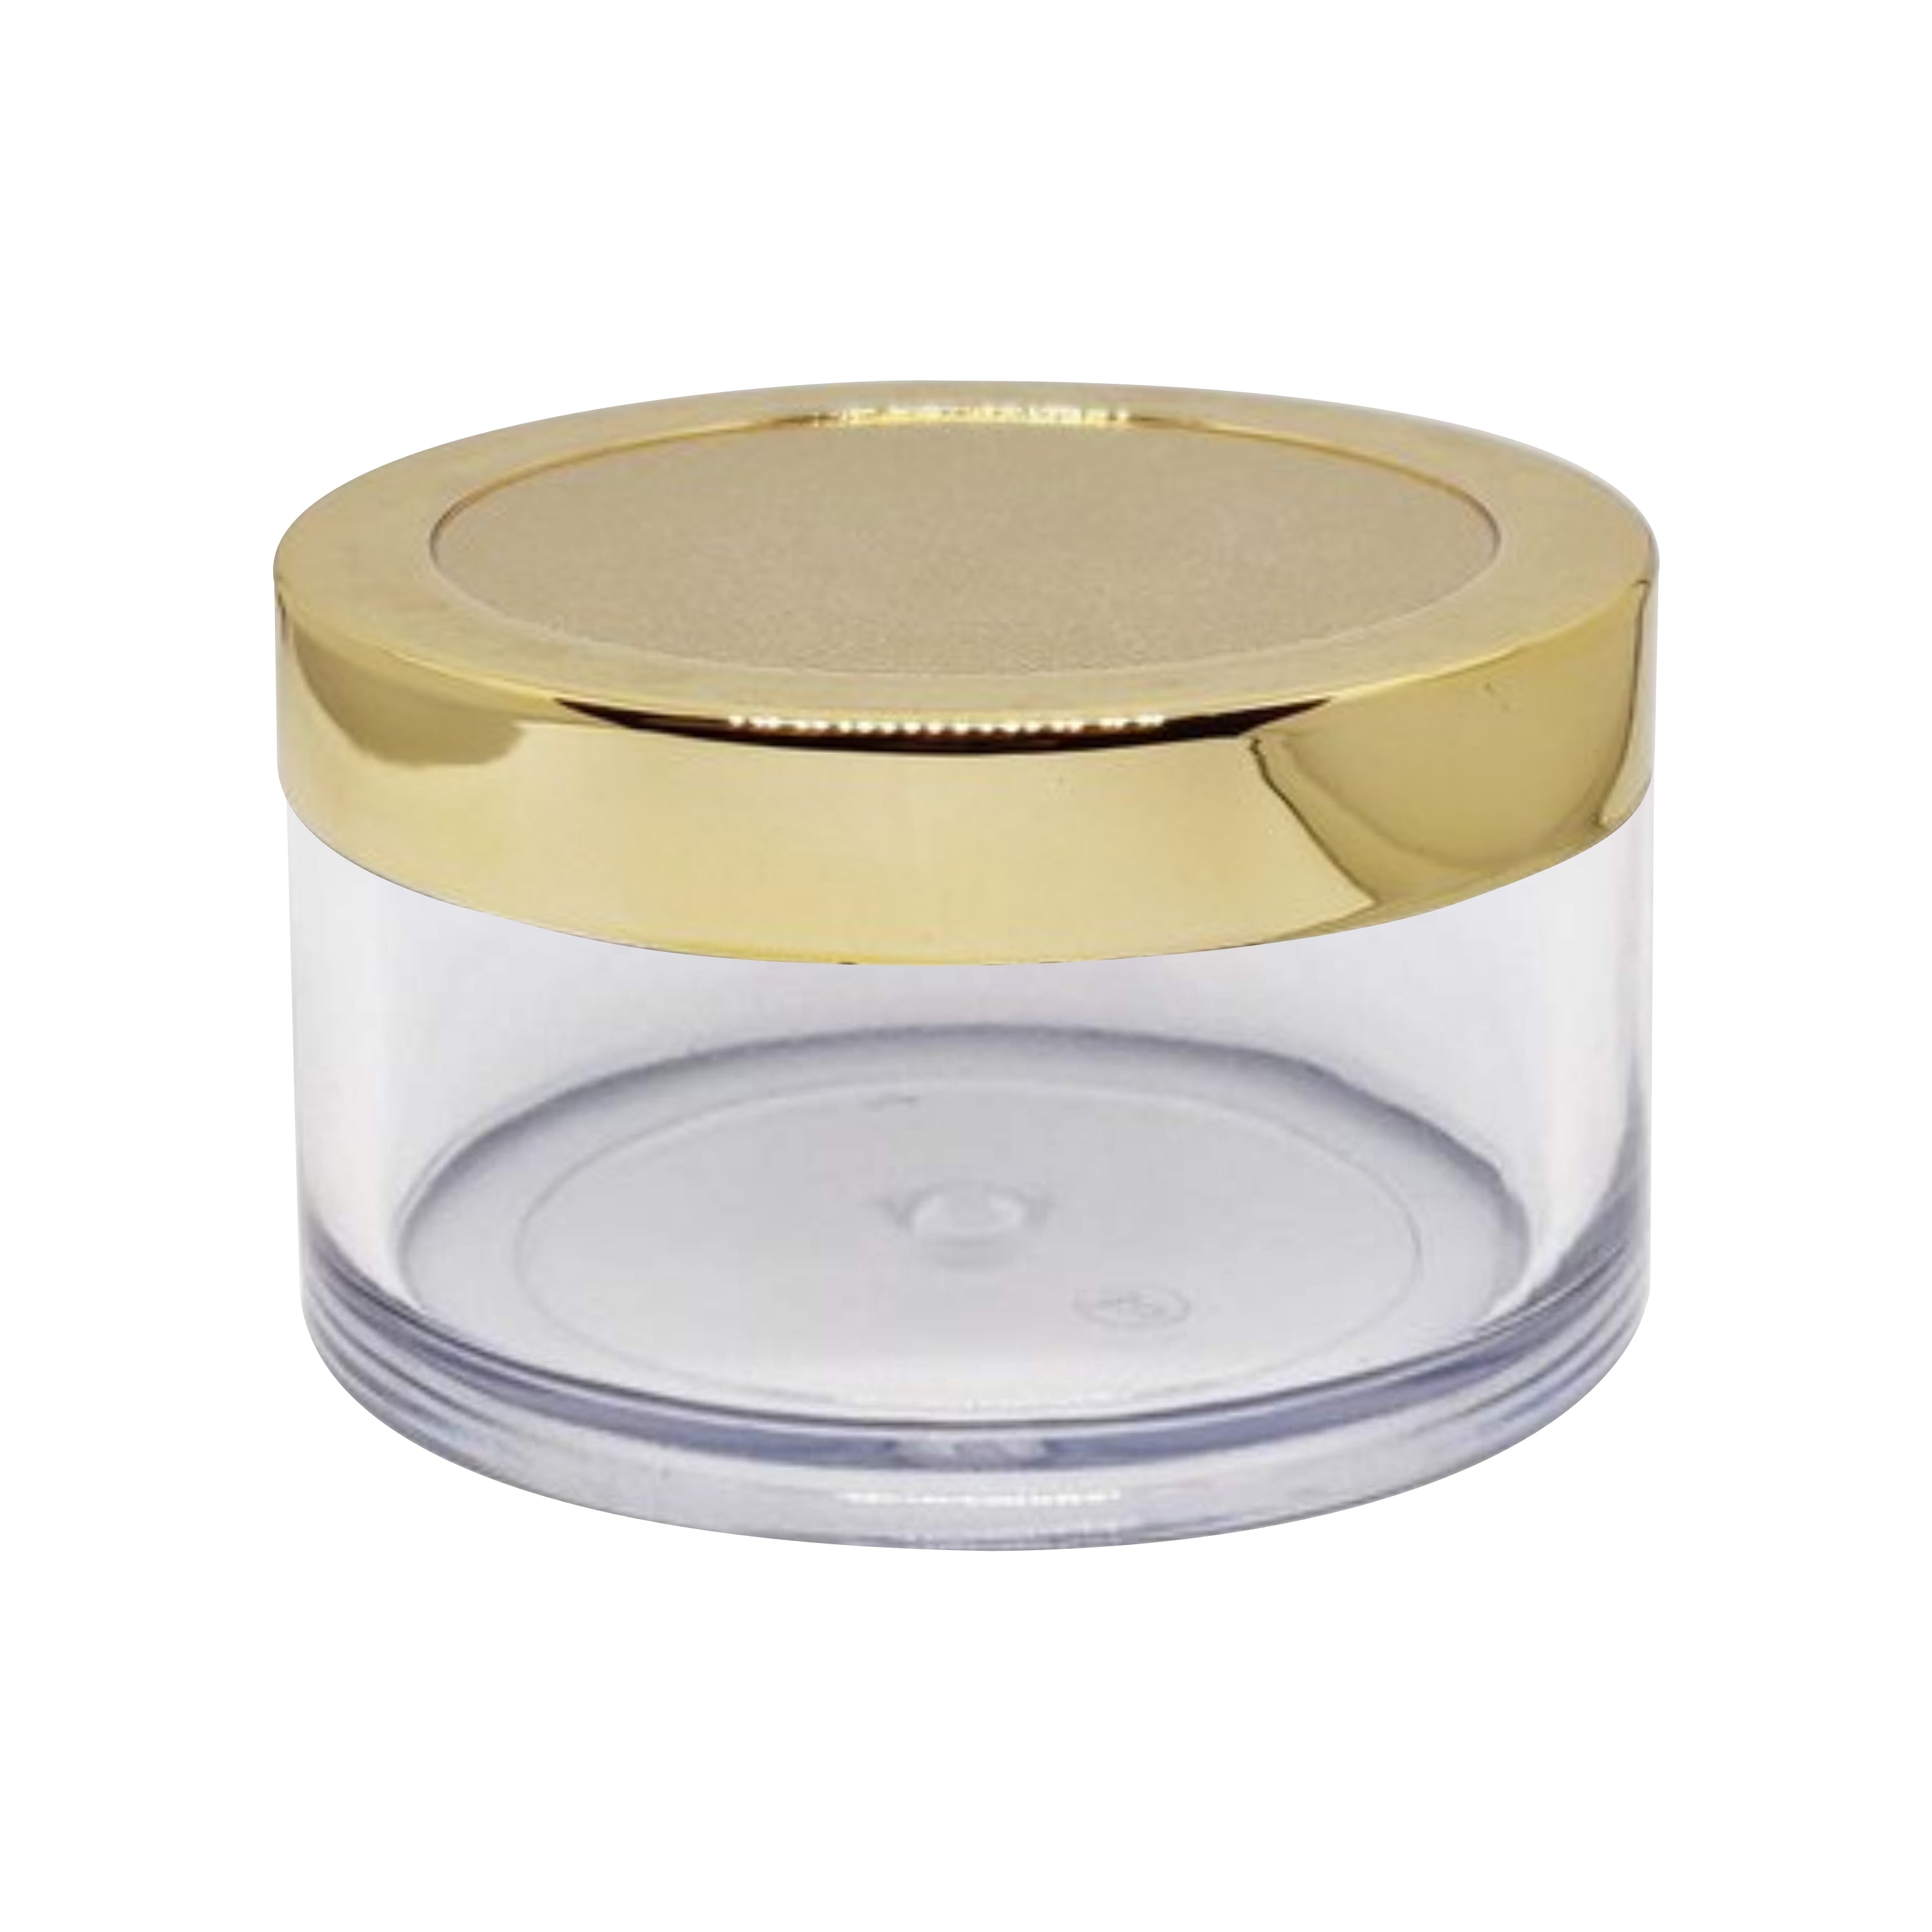 Acrylic Shan Jar With Golden lid/ Cap - 8gm, 15gm, 25gm, 30gm, 50gm, 100gm [ZMJ01]